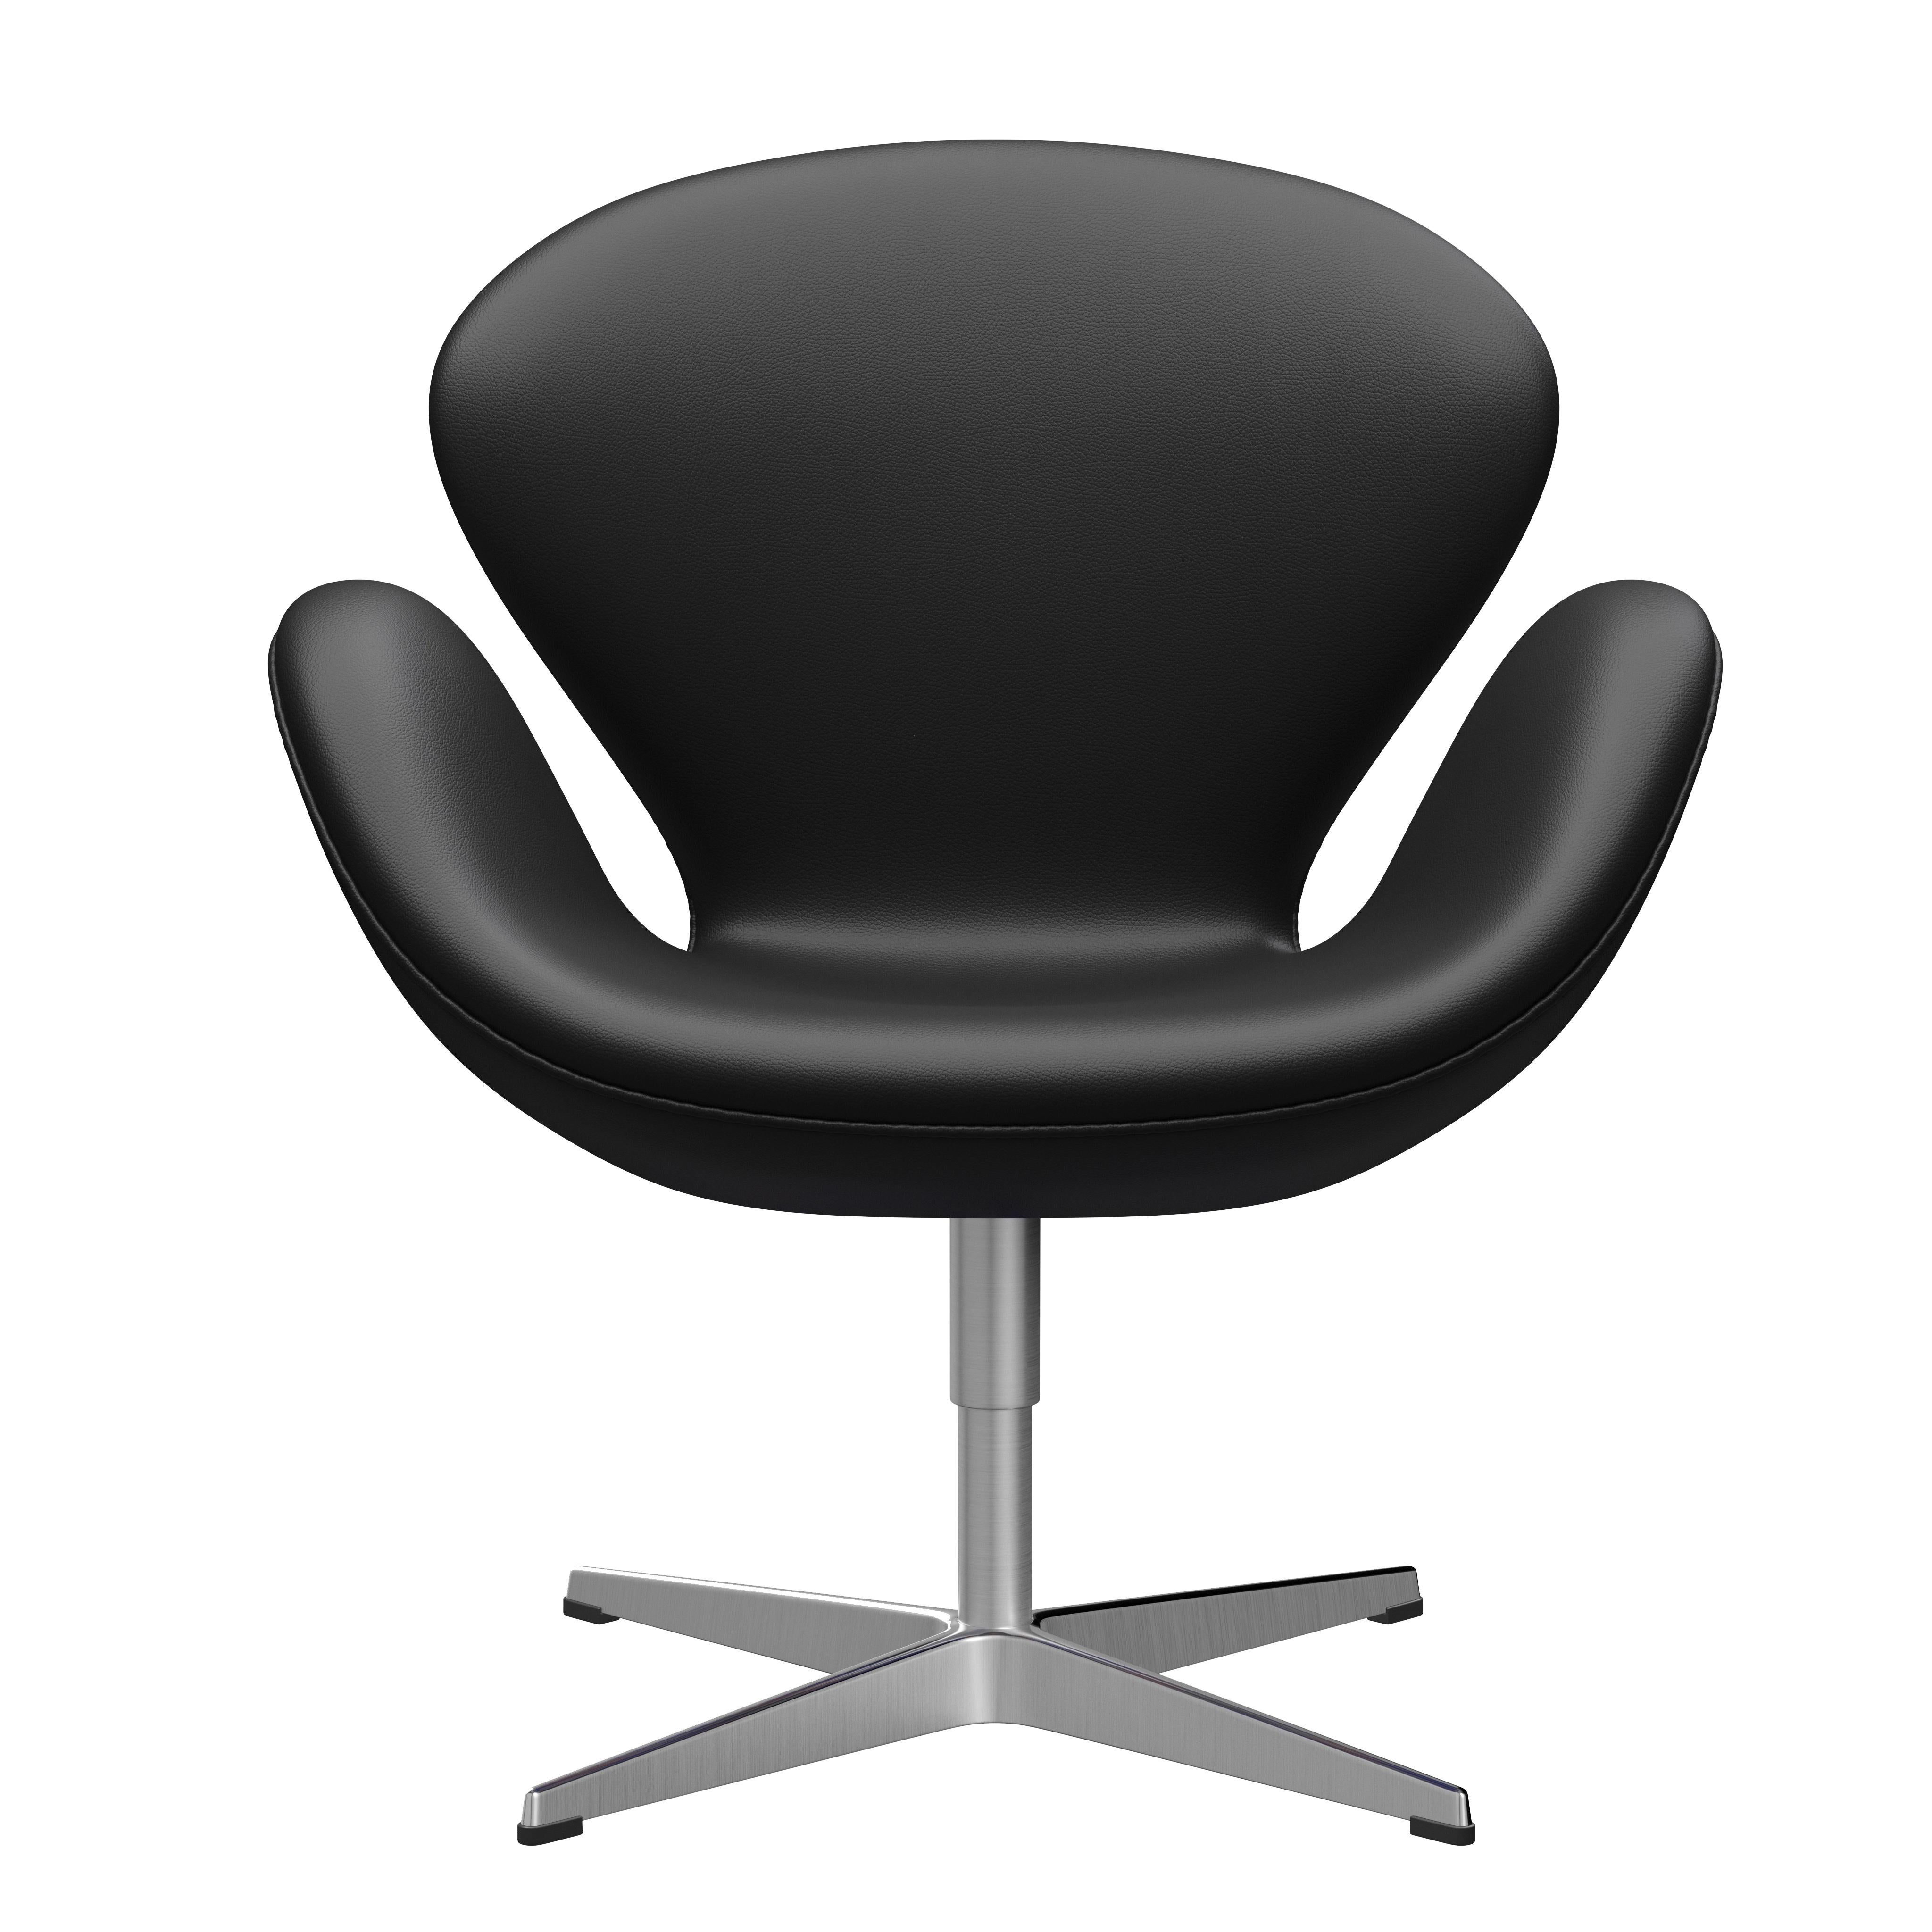 Arne Jacobsen 'Swan' Chair for Fritz Hansen in Leather Upholstery (Cat. 4) For Sale 10